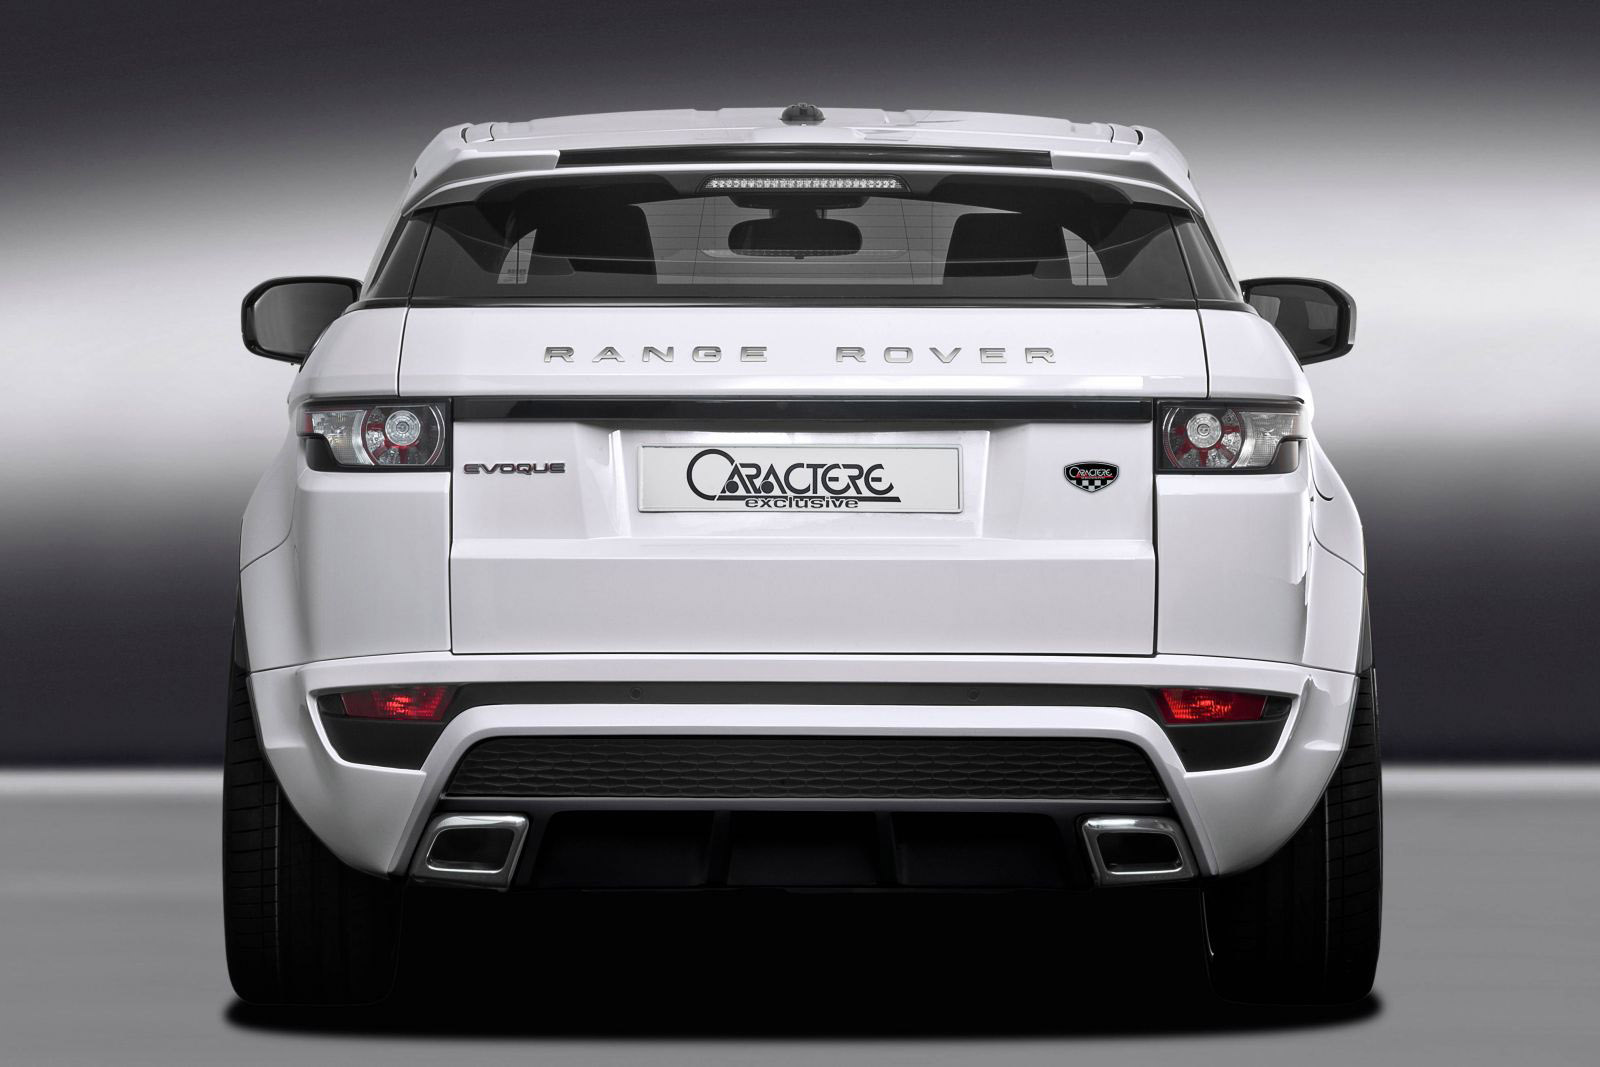 Caractere Range Rover Evoque